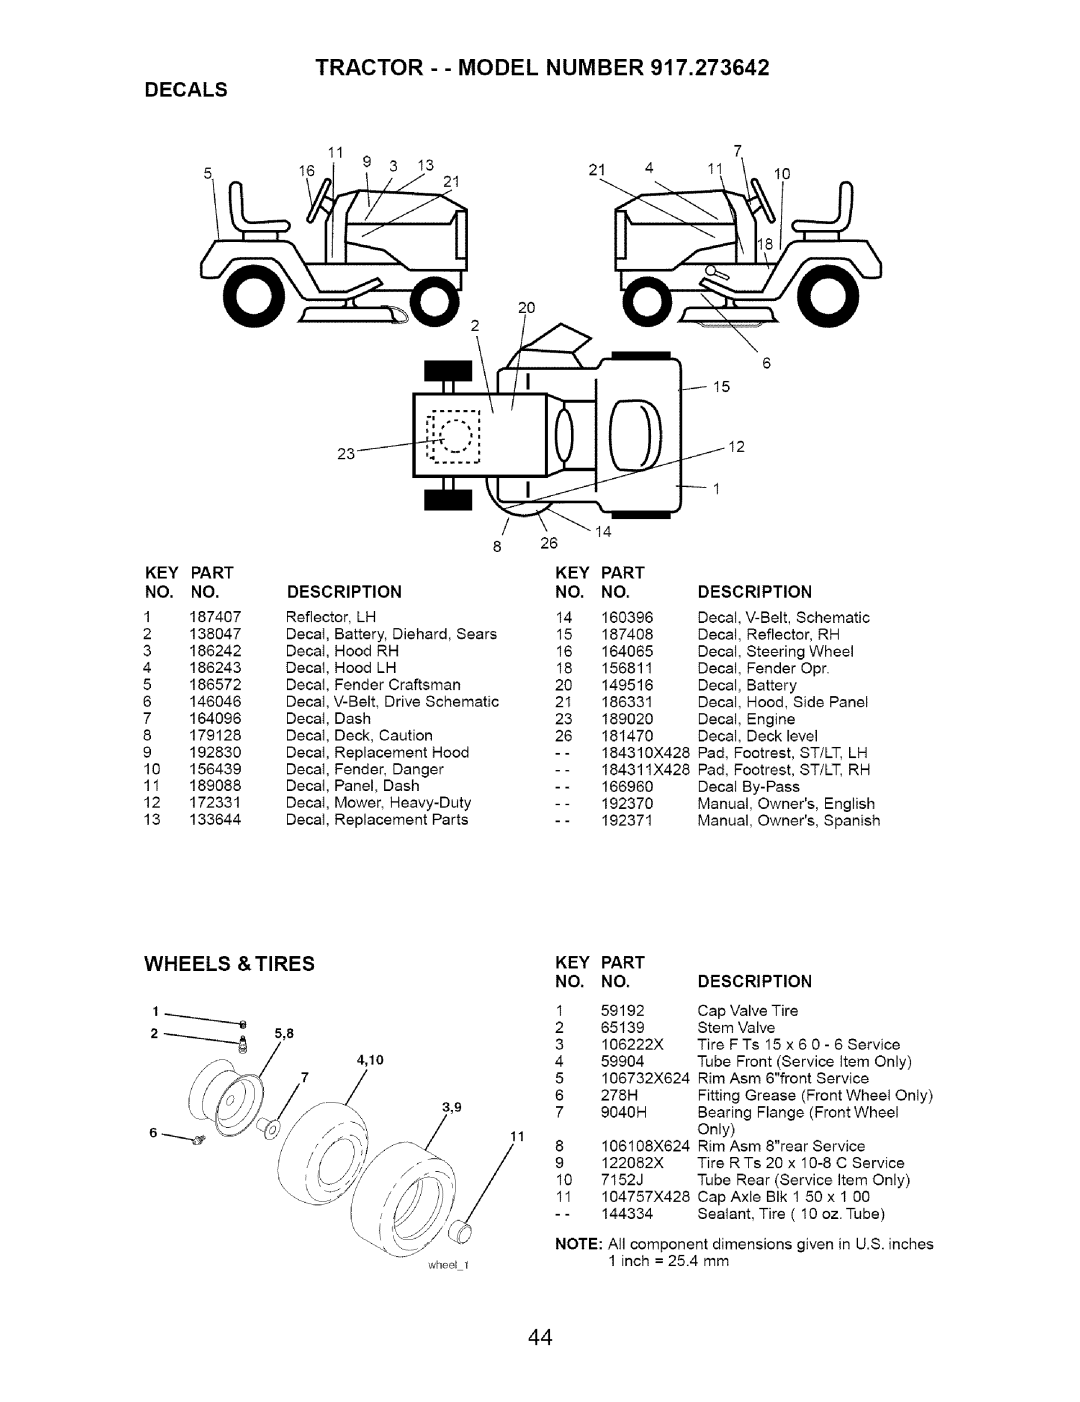 Craftsman 917.273642 manual TRACTOR - - MODEL NUMBER 917,273642, Decals, Wheels, Tires, Part, Description 